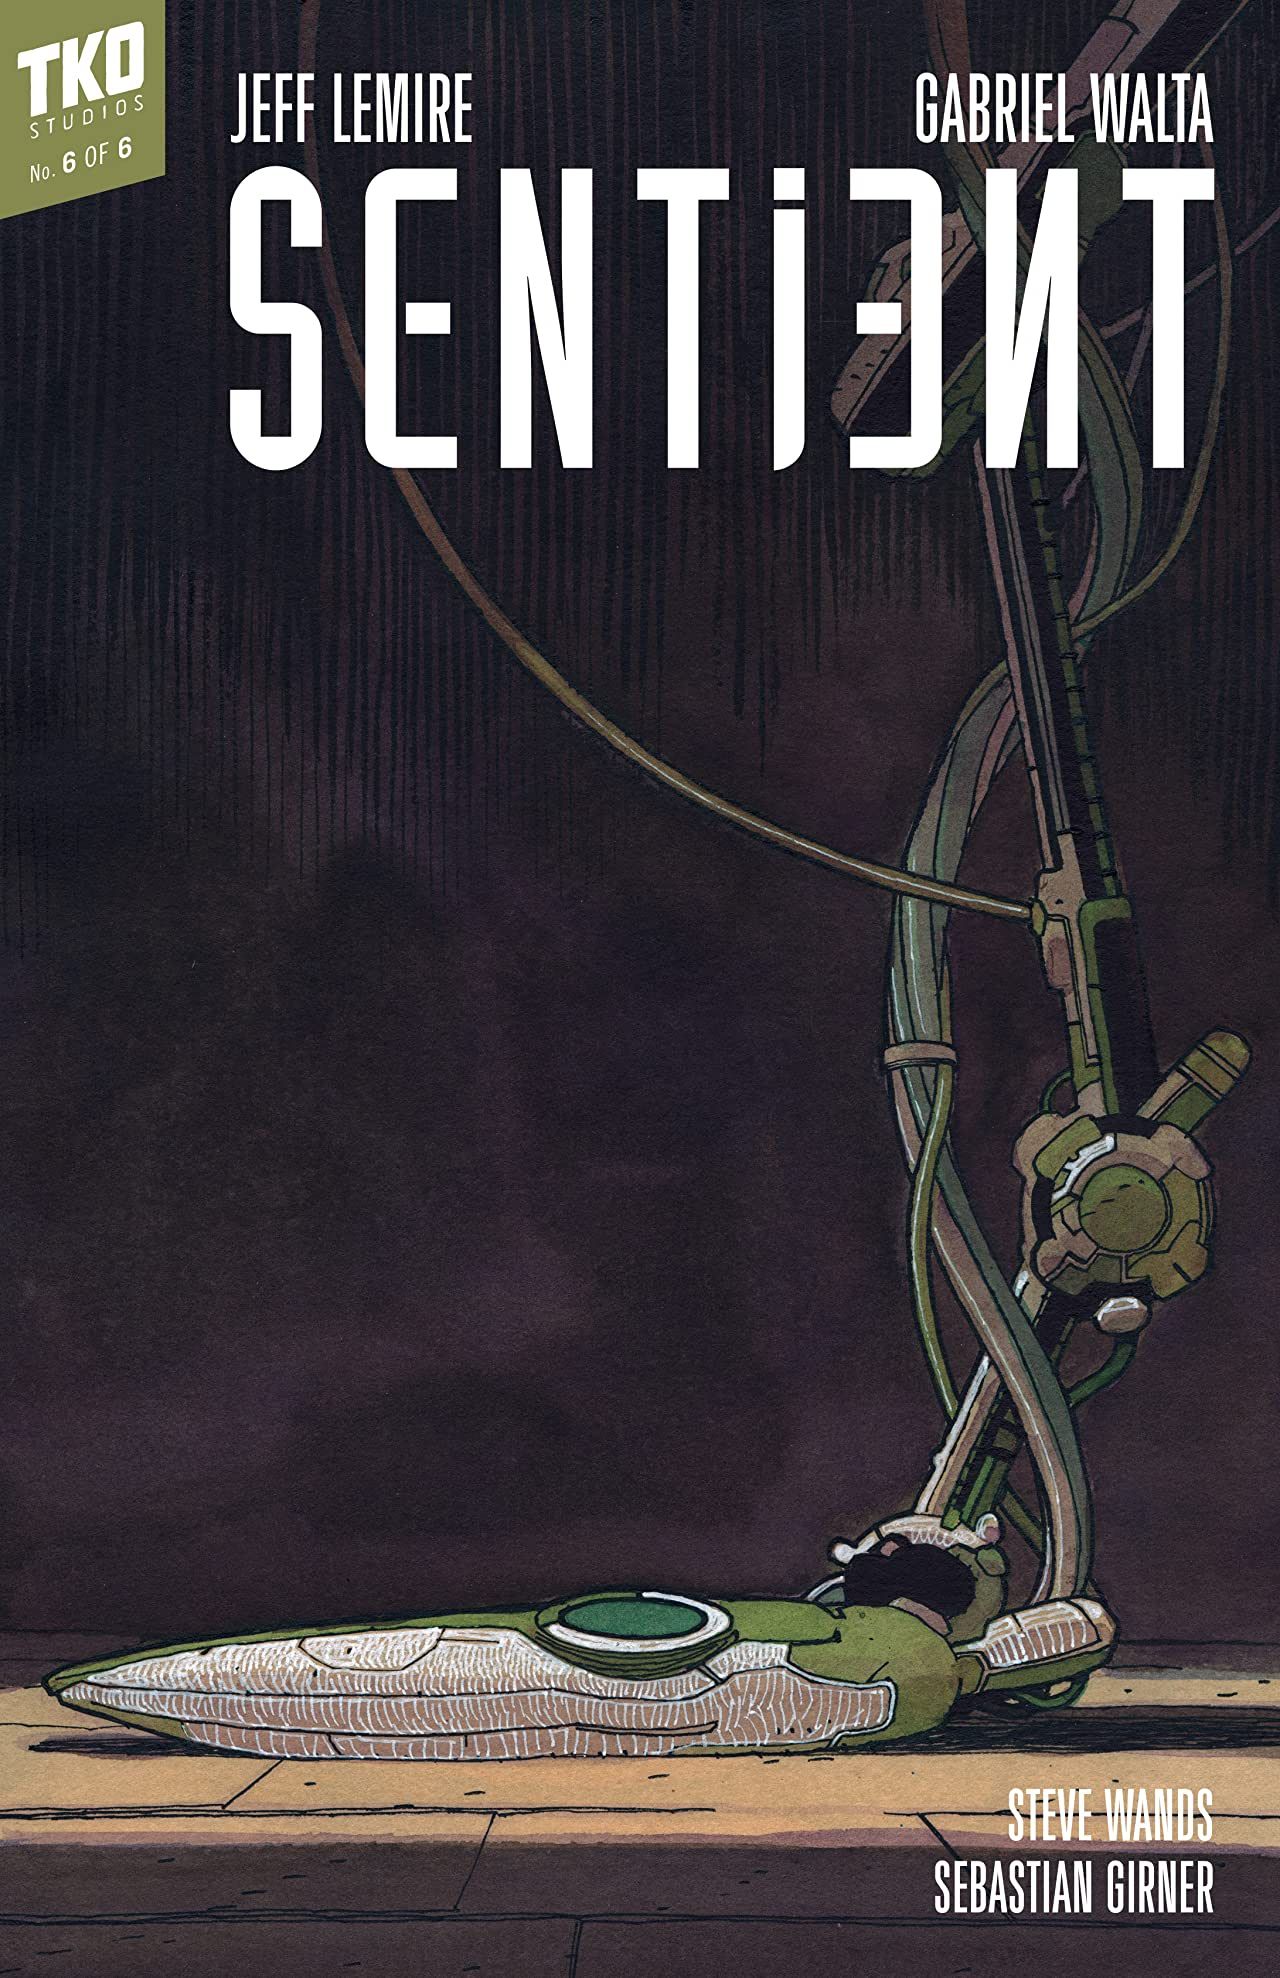 Sentient #06 (of 6) (cover)